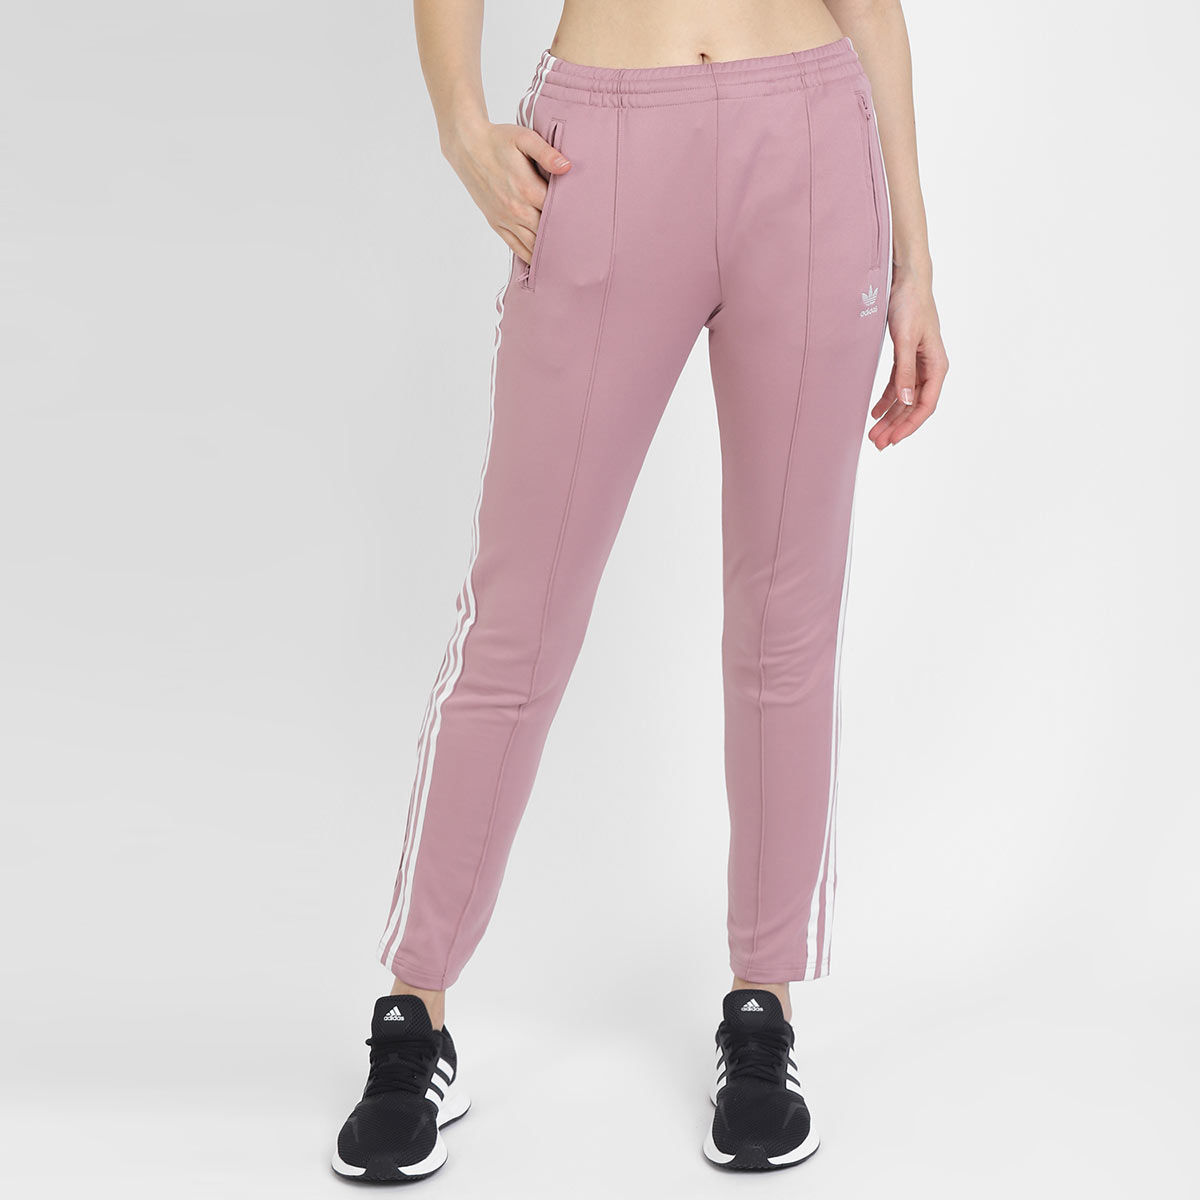 Buy Purple Track Pants for Women by ADIDAS Online  Ajiocom